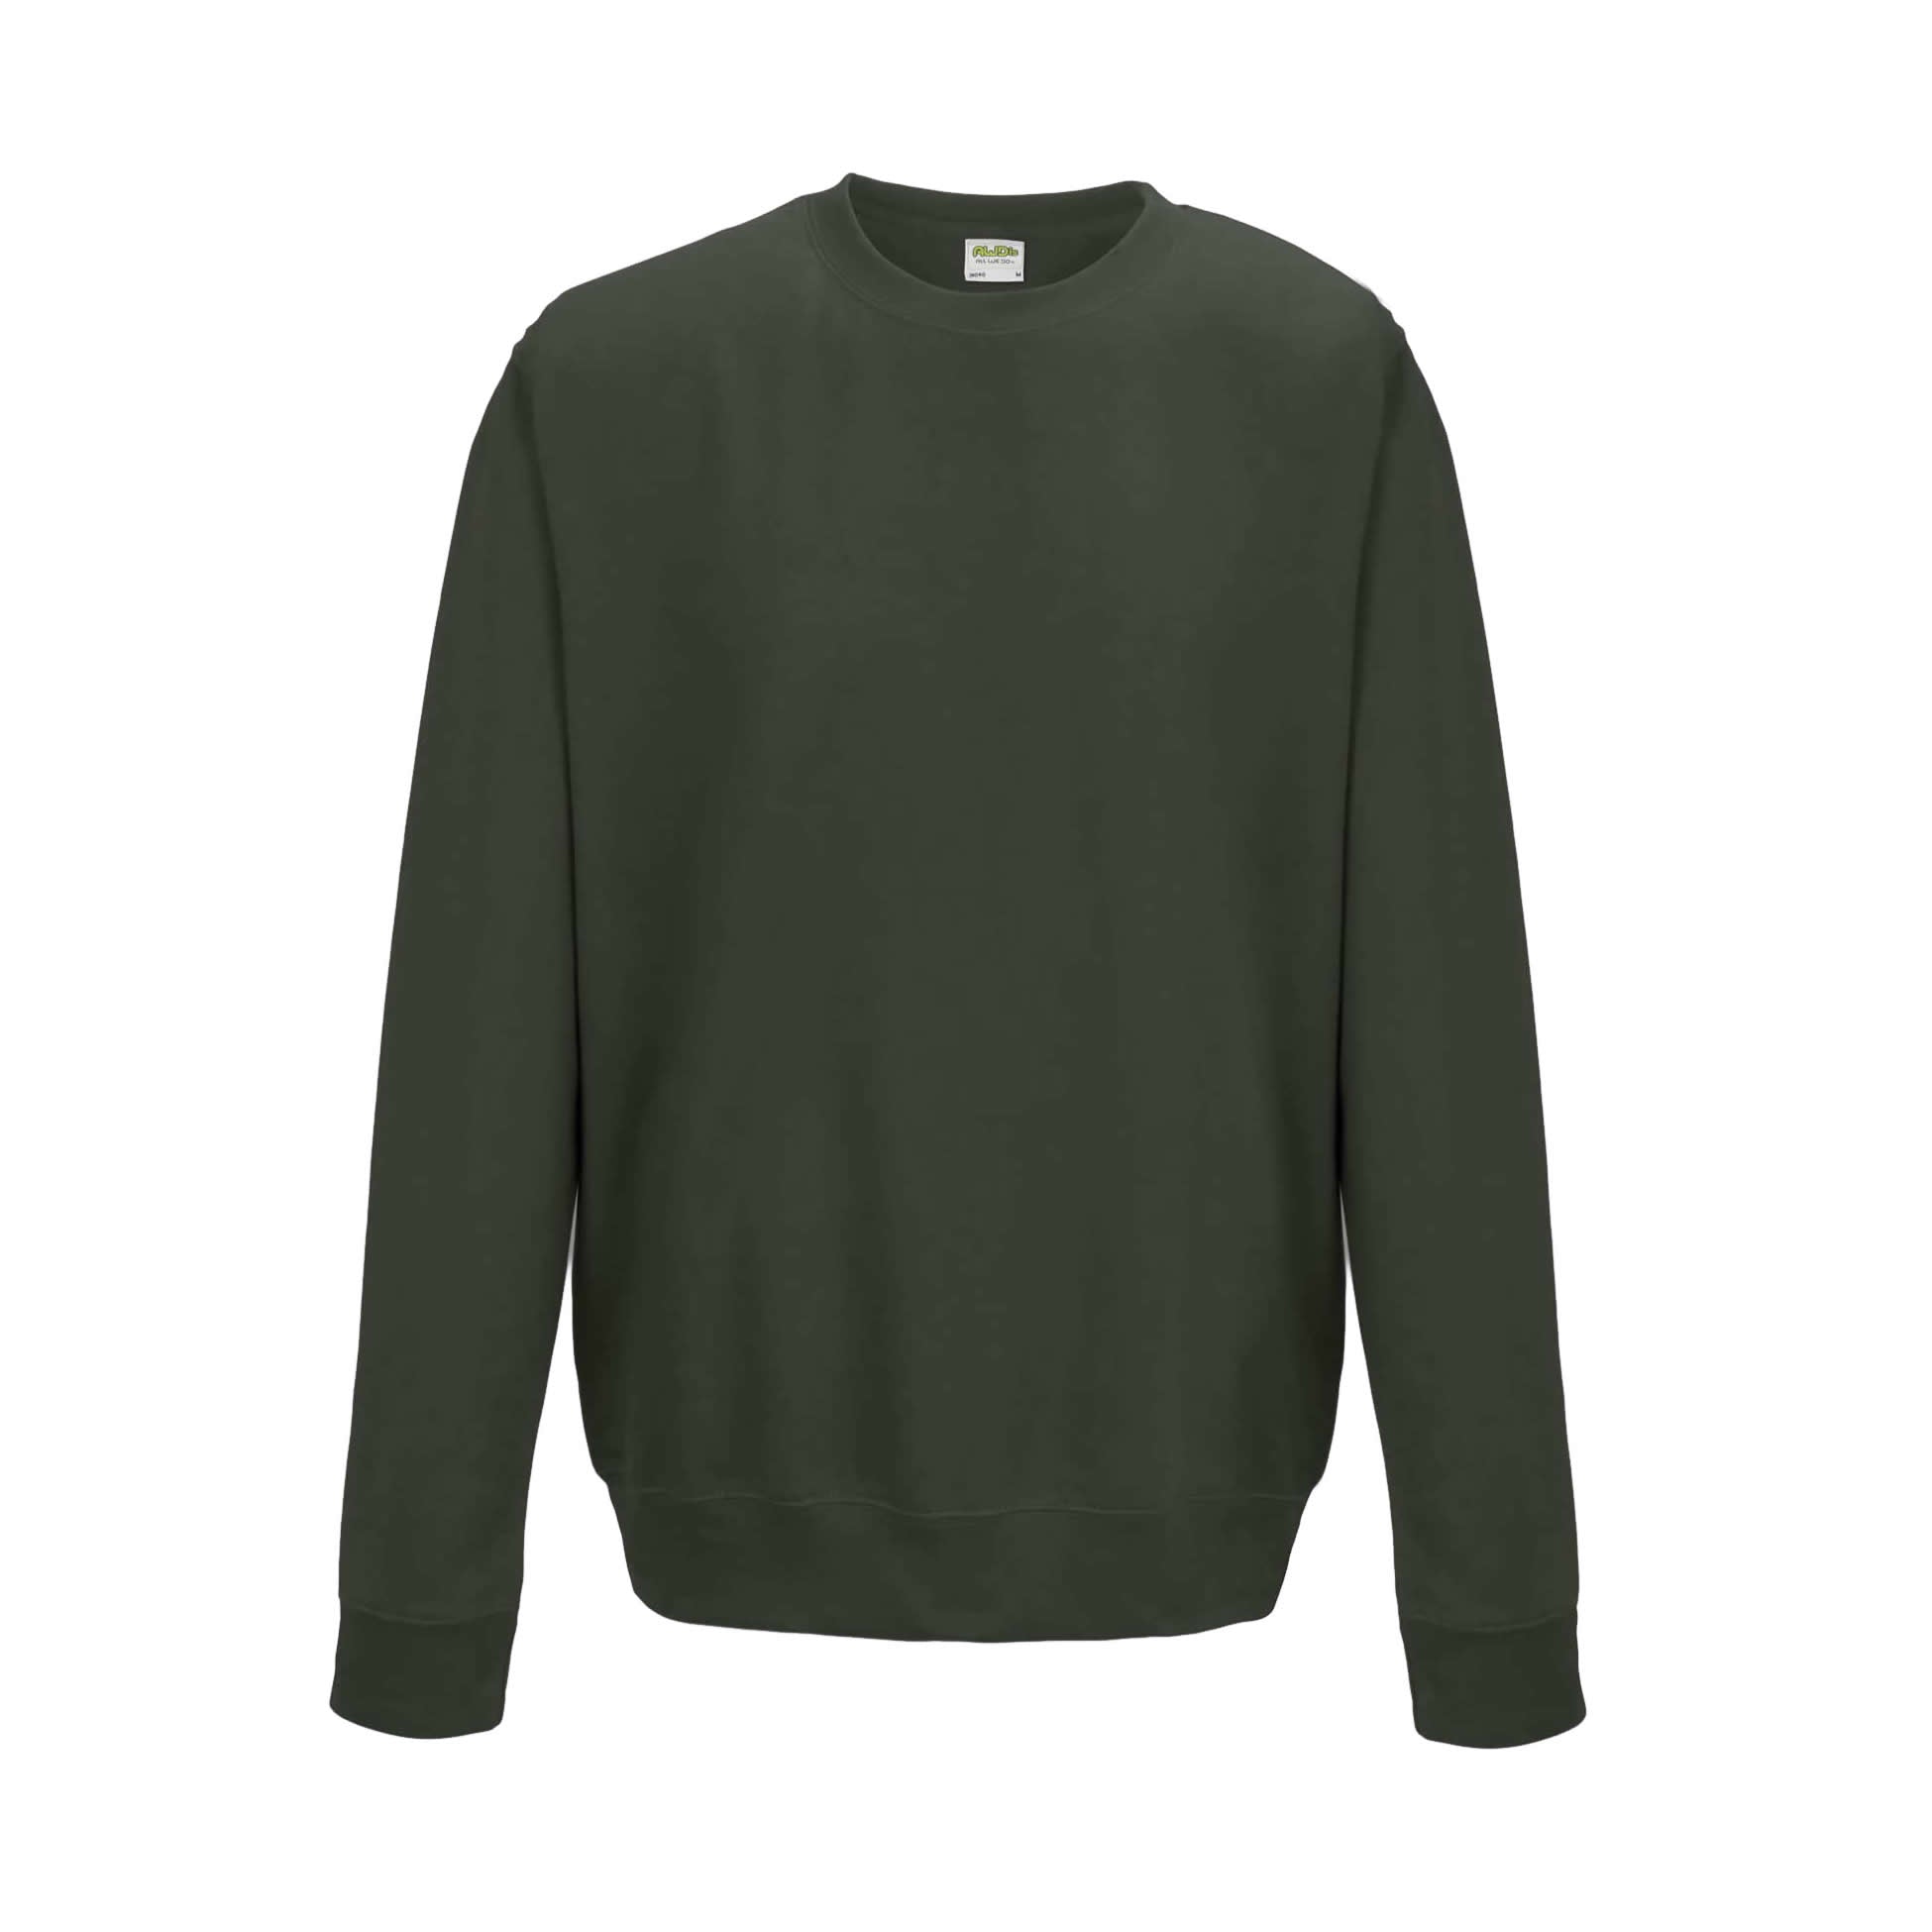 Medium Olive Sweatshirt - choose logo